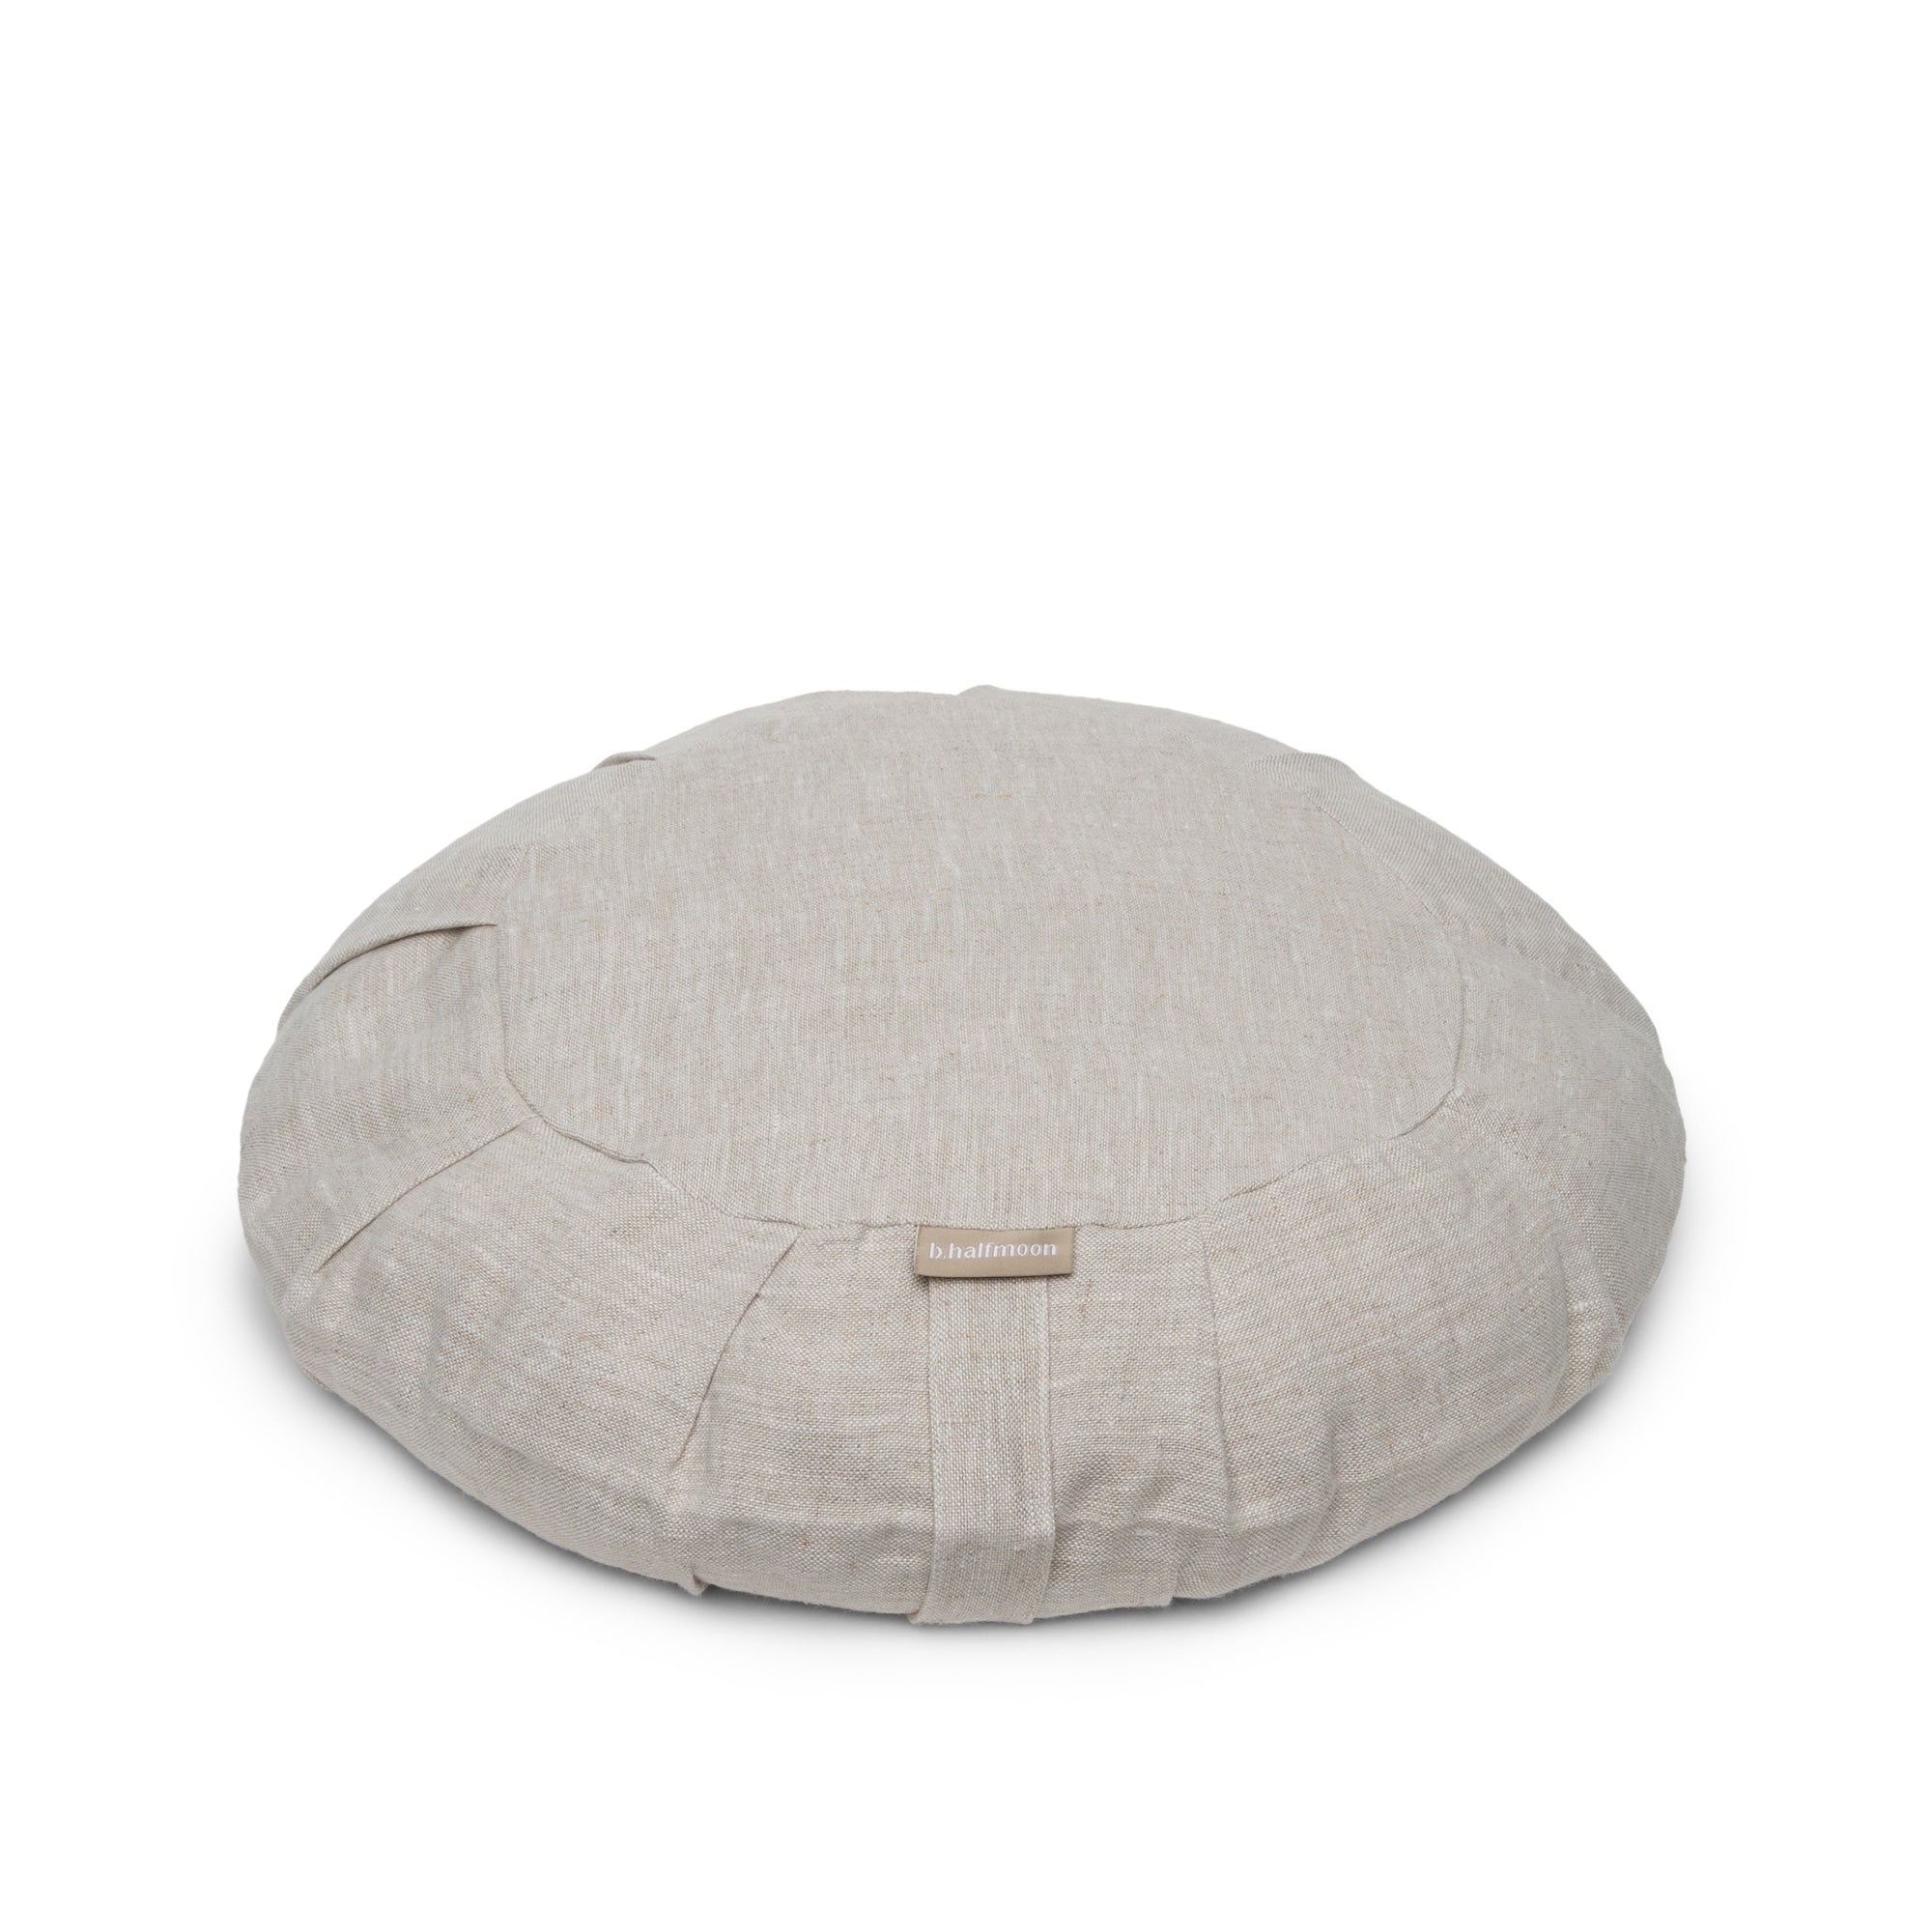 b, halfmoon Round Meditation Cushion Natural Linen top